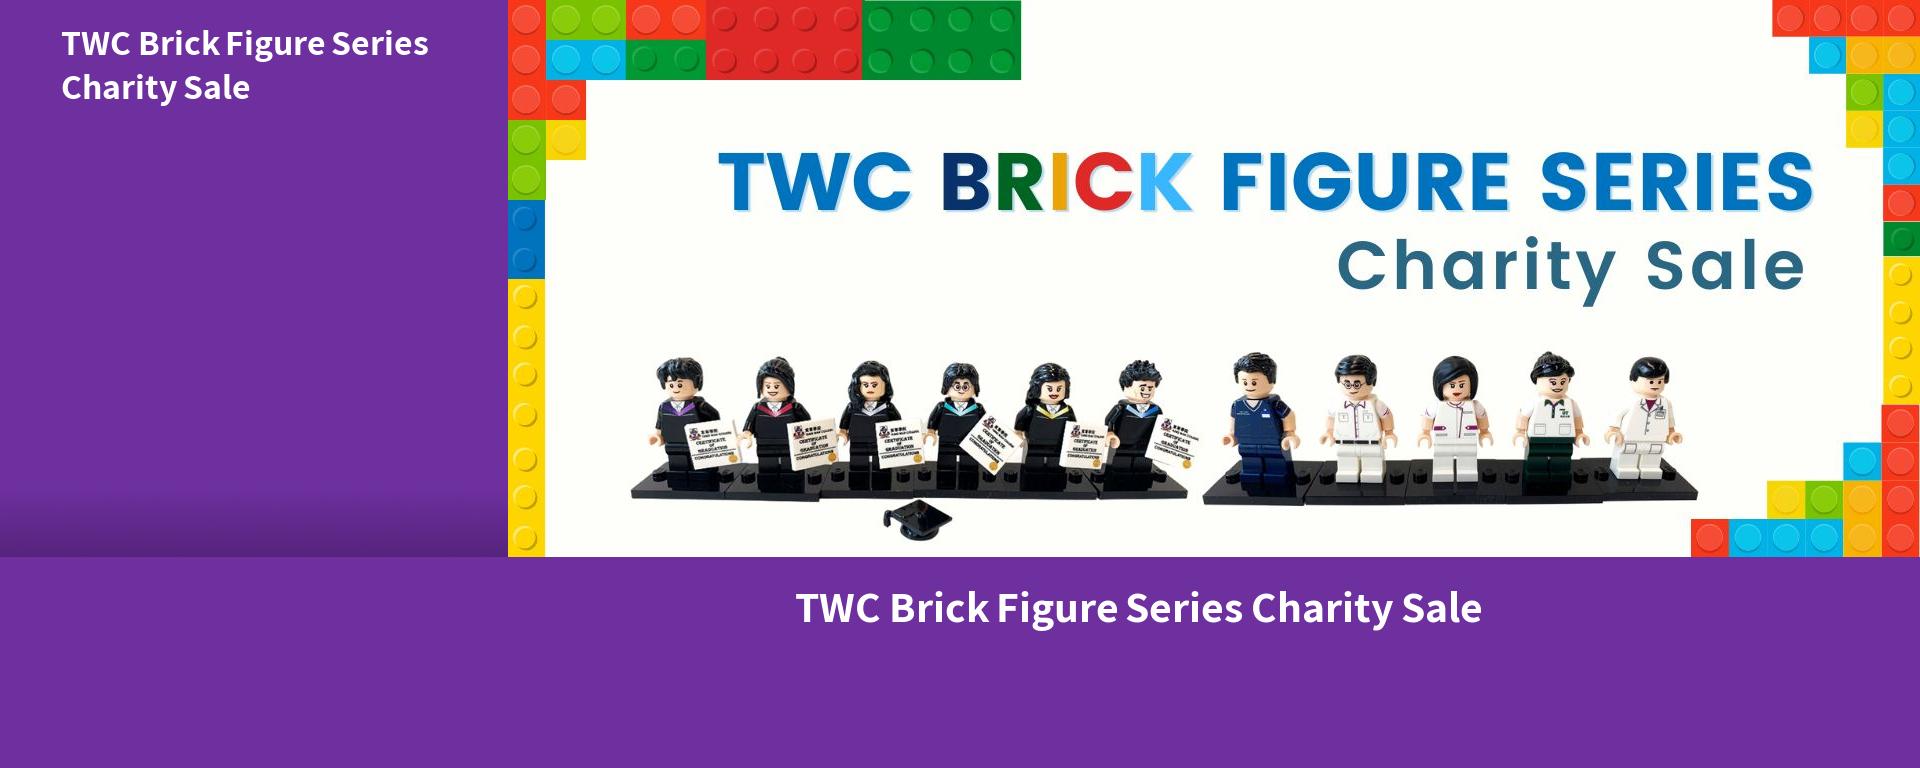 TWC Brick Figure Series Charity Sale